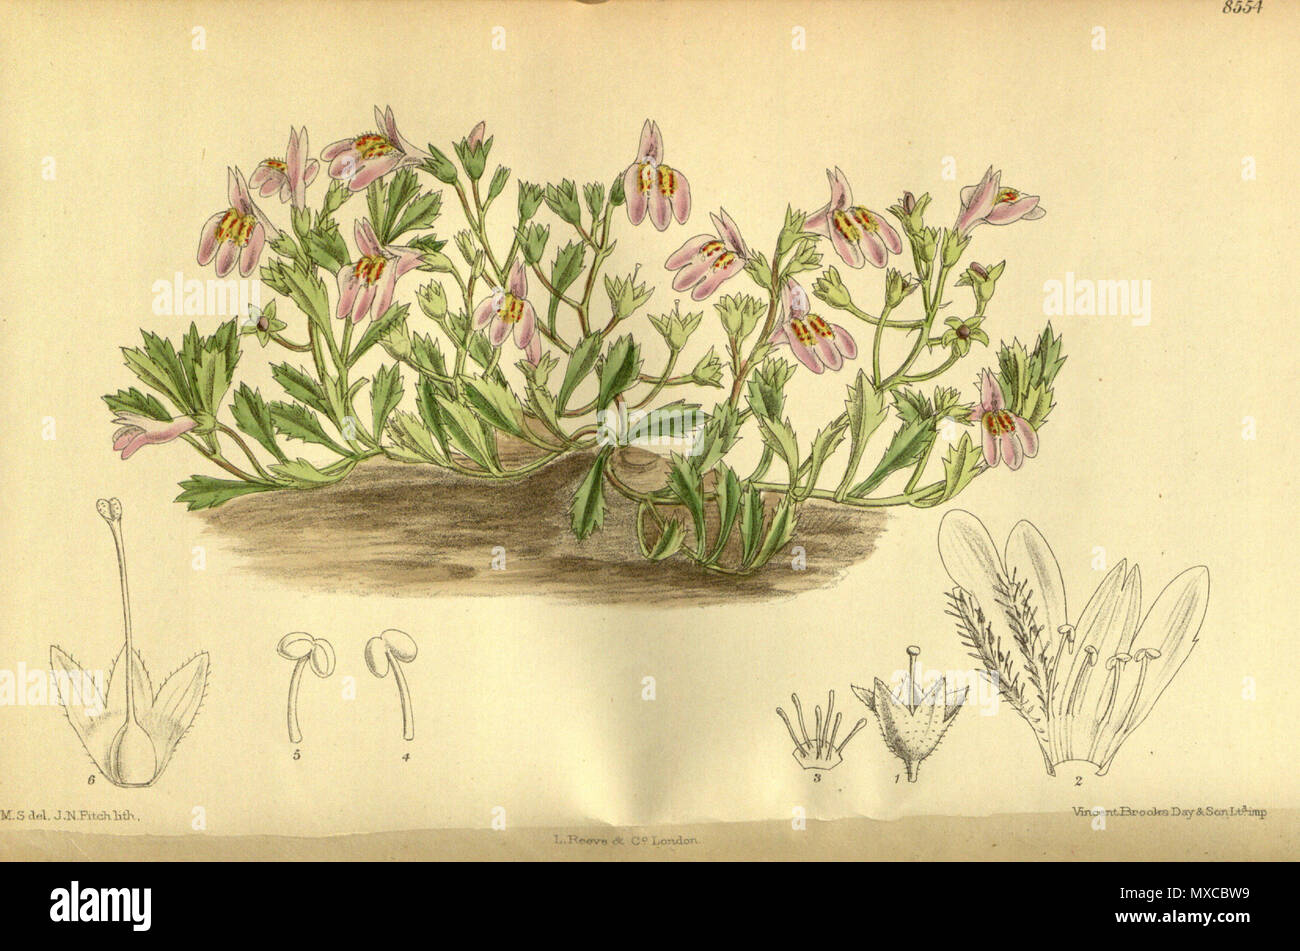 . Mazus reptans, Phrymaceae . 1914. M.S. del., J.N.Fitch lith. 409 Mazus reptans 140-8554 Stock Photo